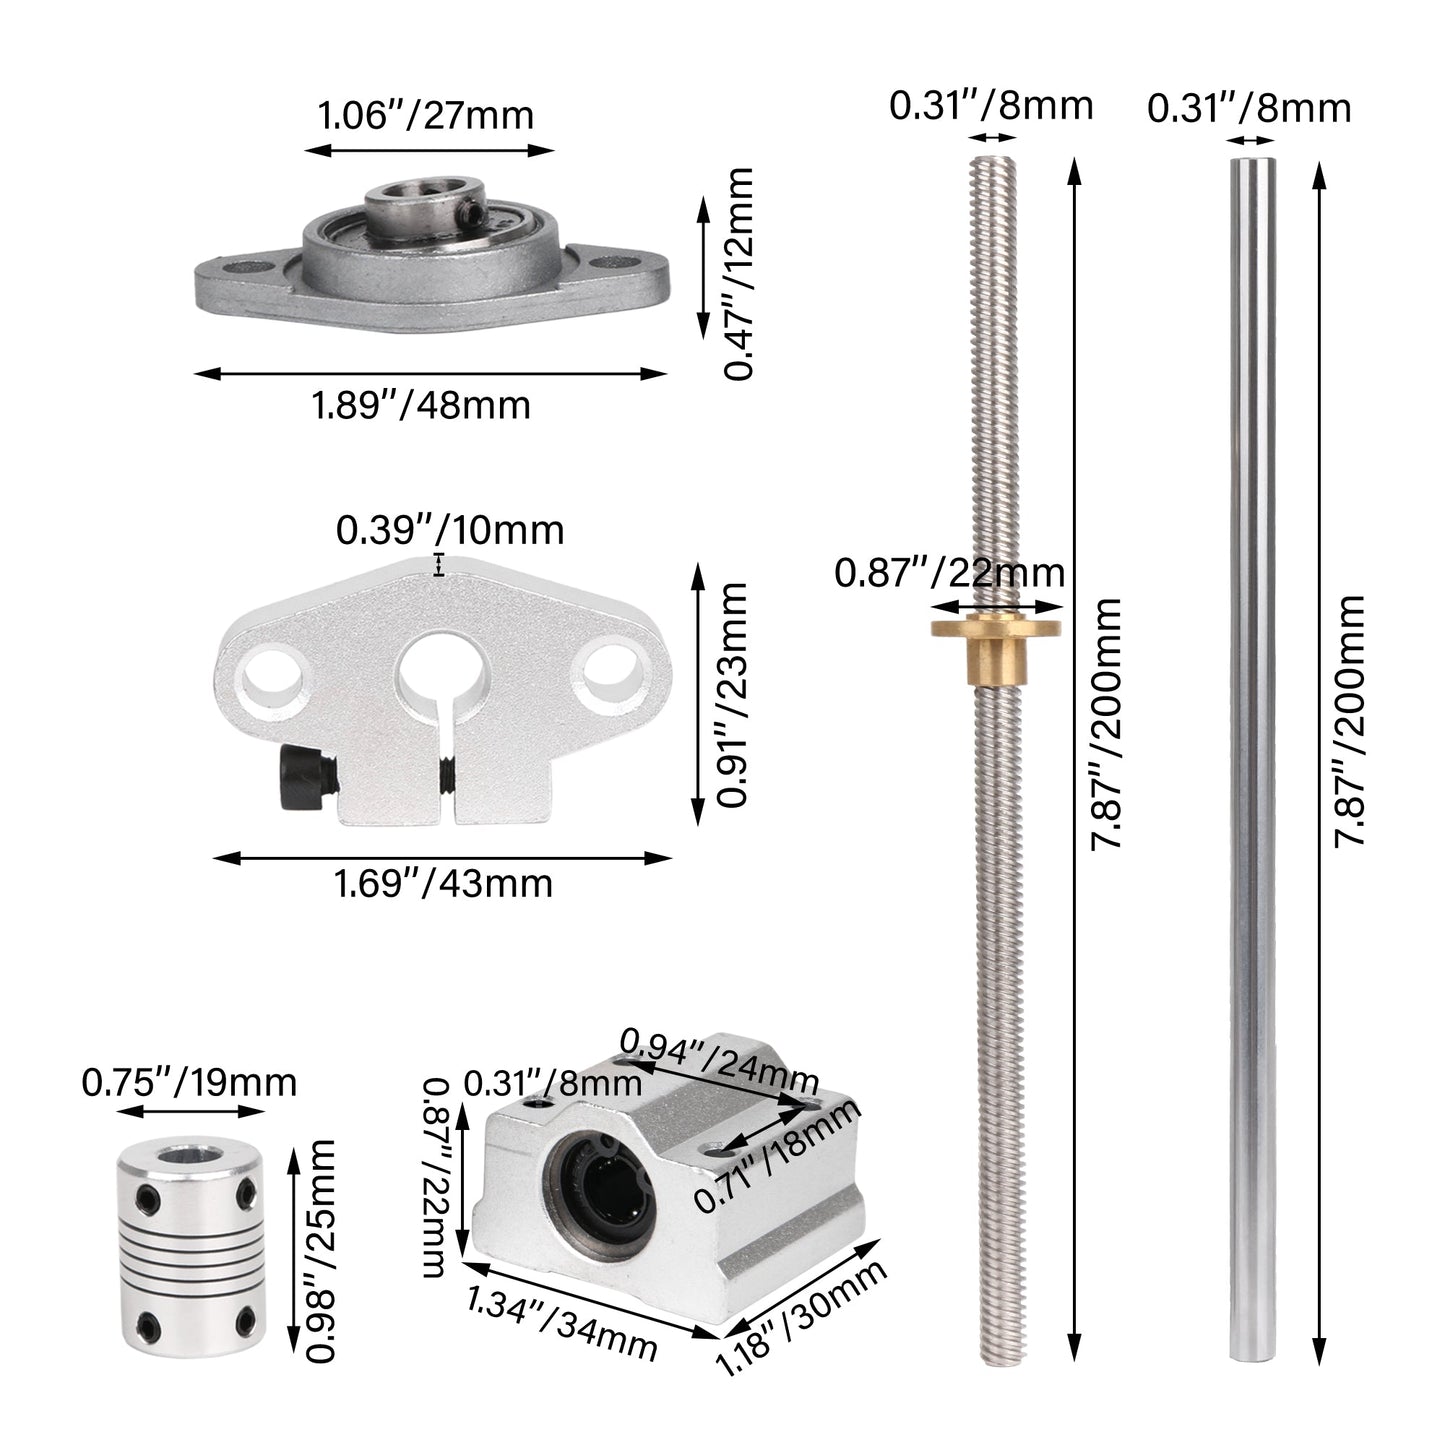 BQLZR Metal Dual Rail Screw Rod Set Rail Shaft Support Optical Axis for 3D Printers